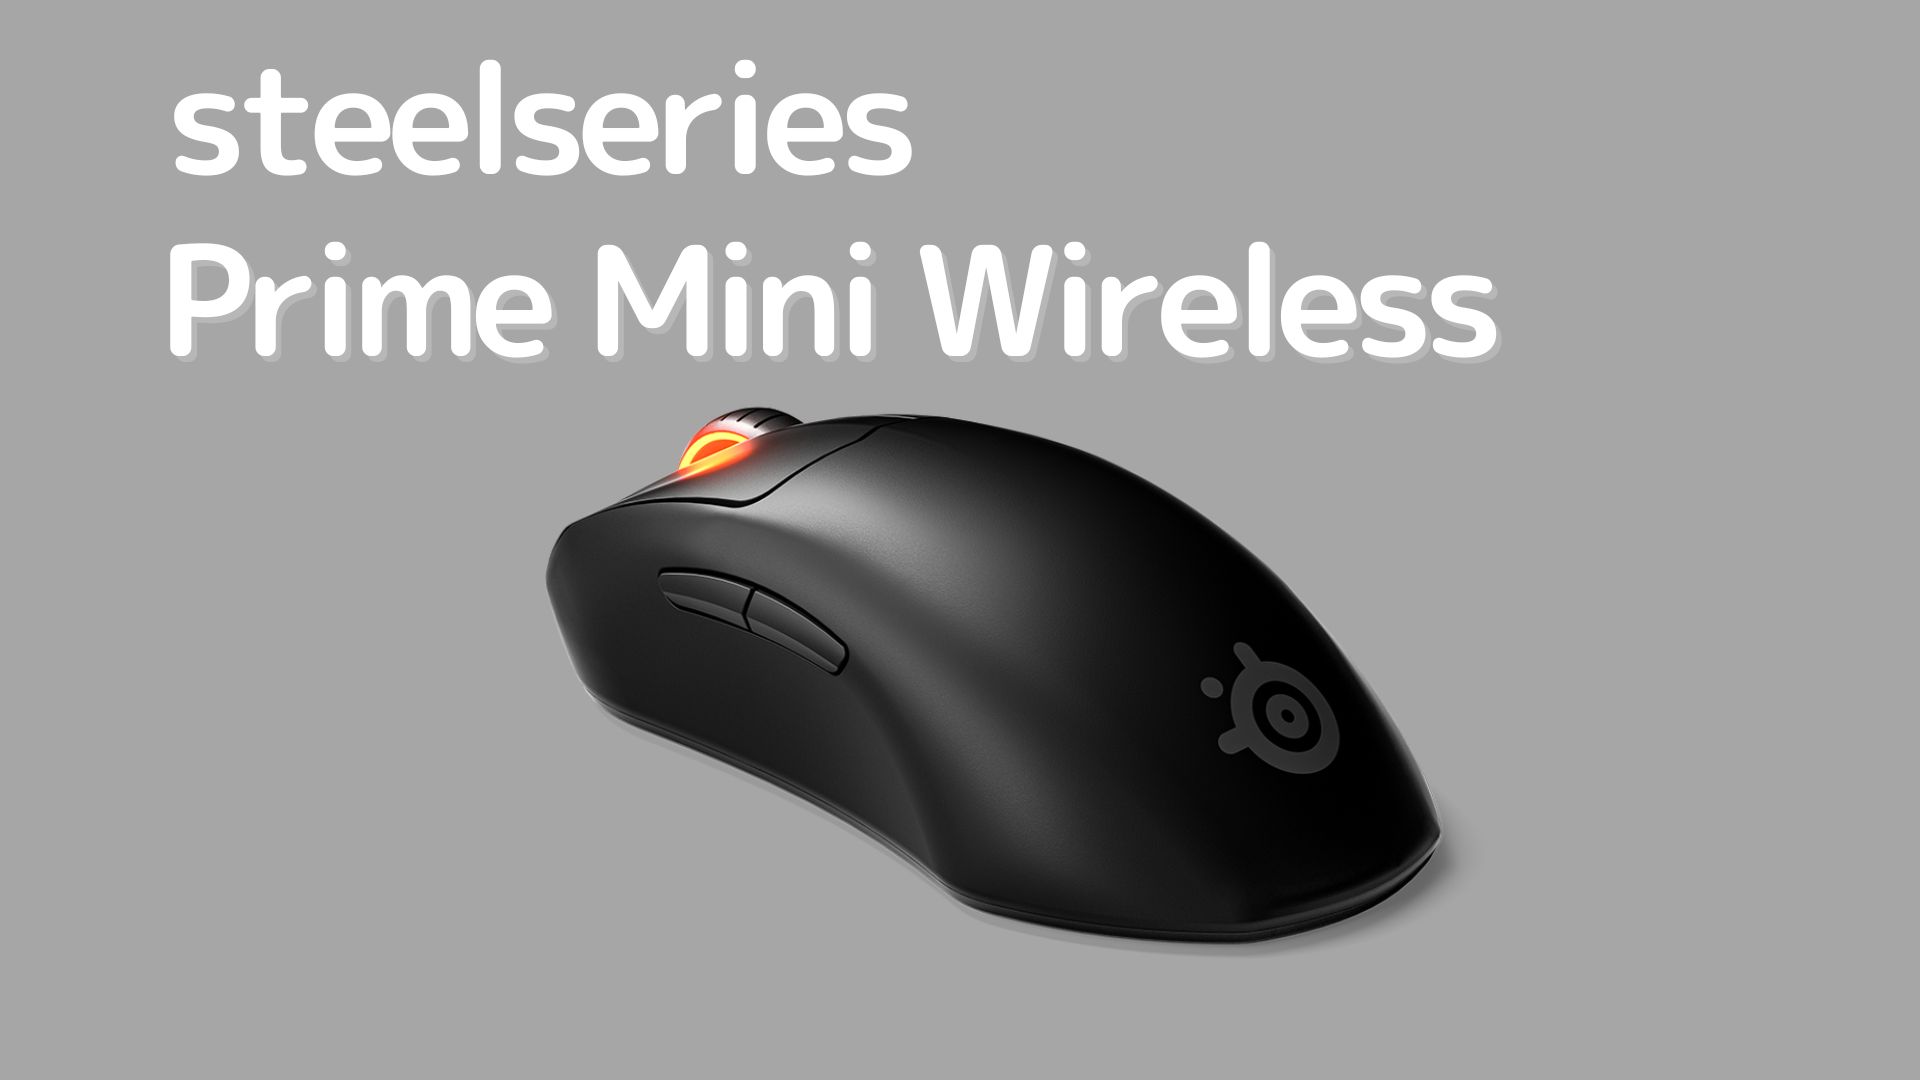 steelseries Prime Mini Wireless」レビュー！超軽量の無線マウスで 